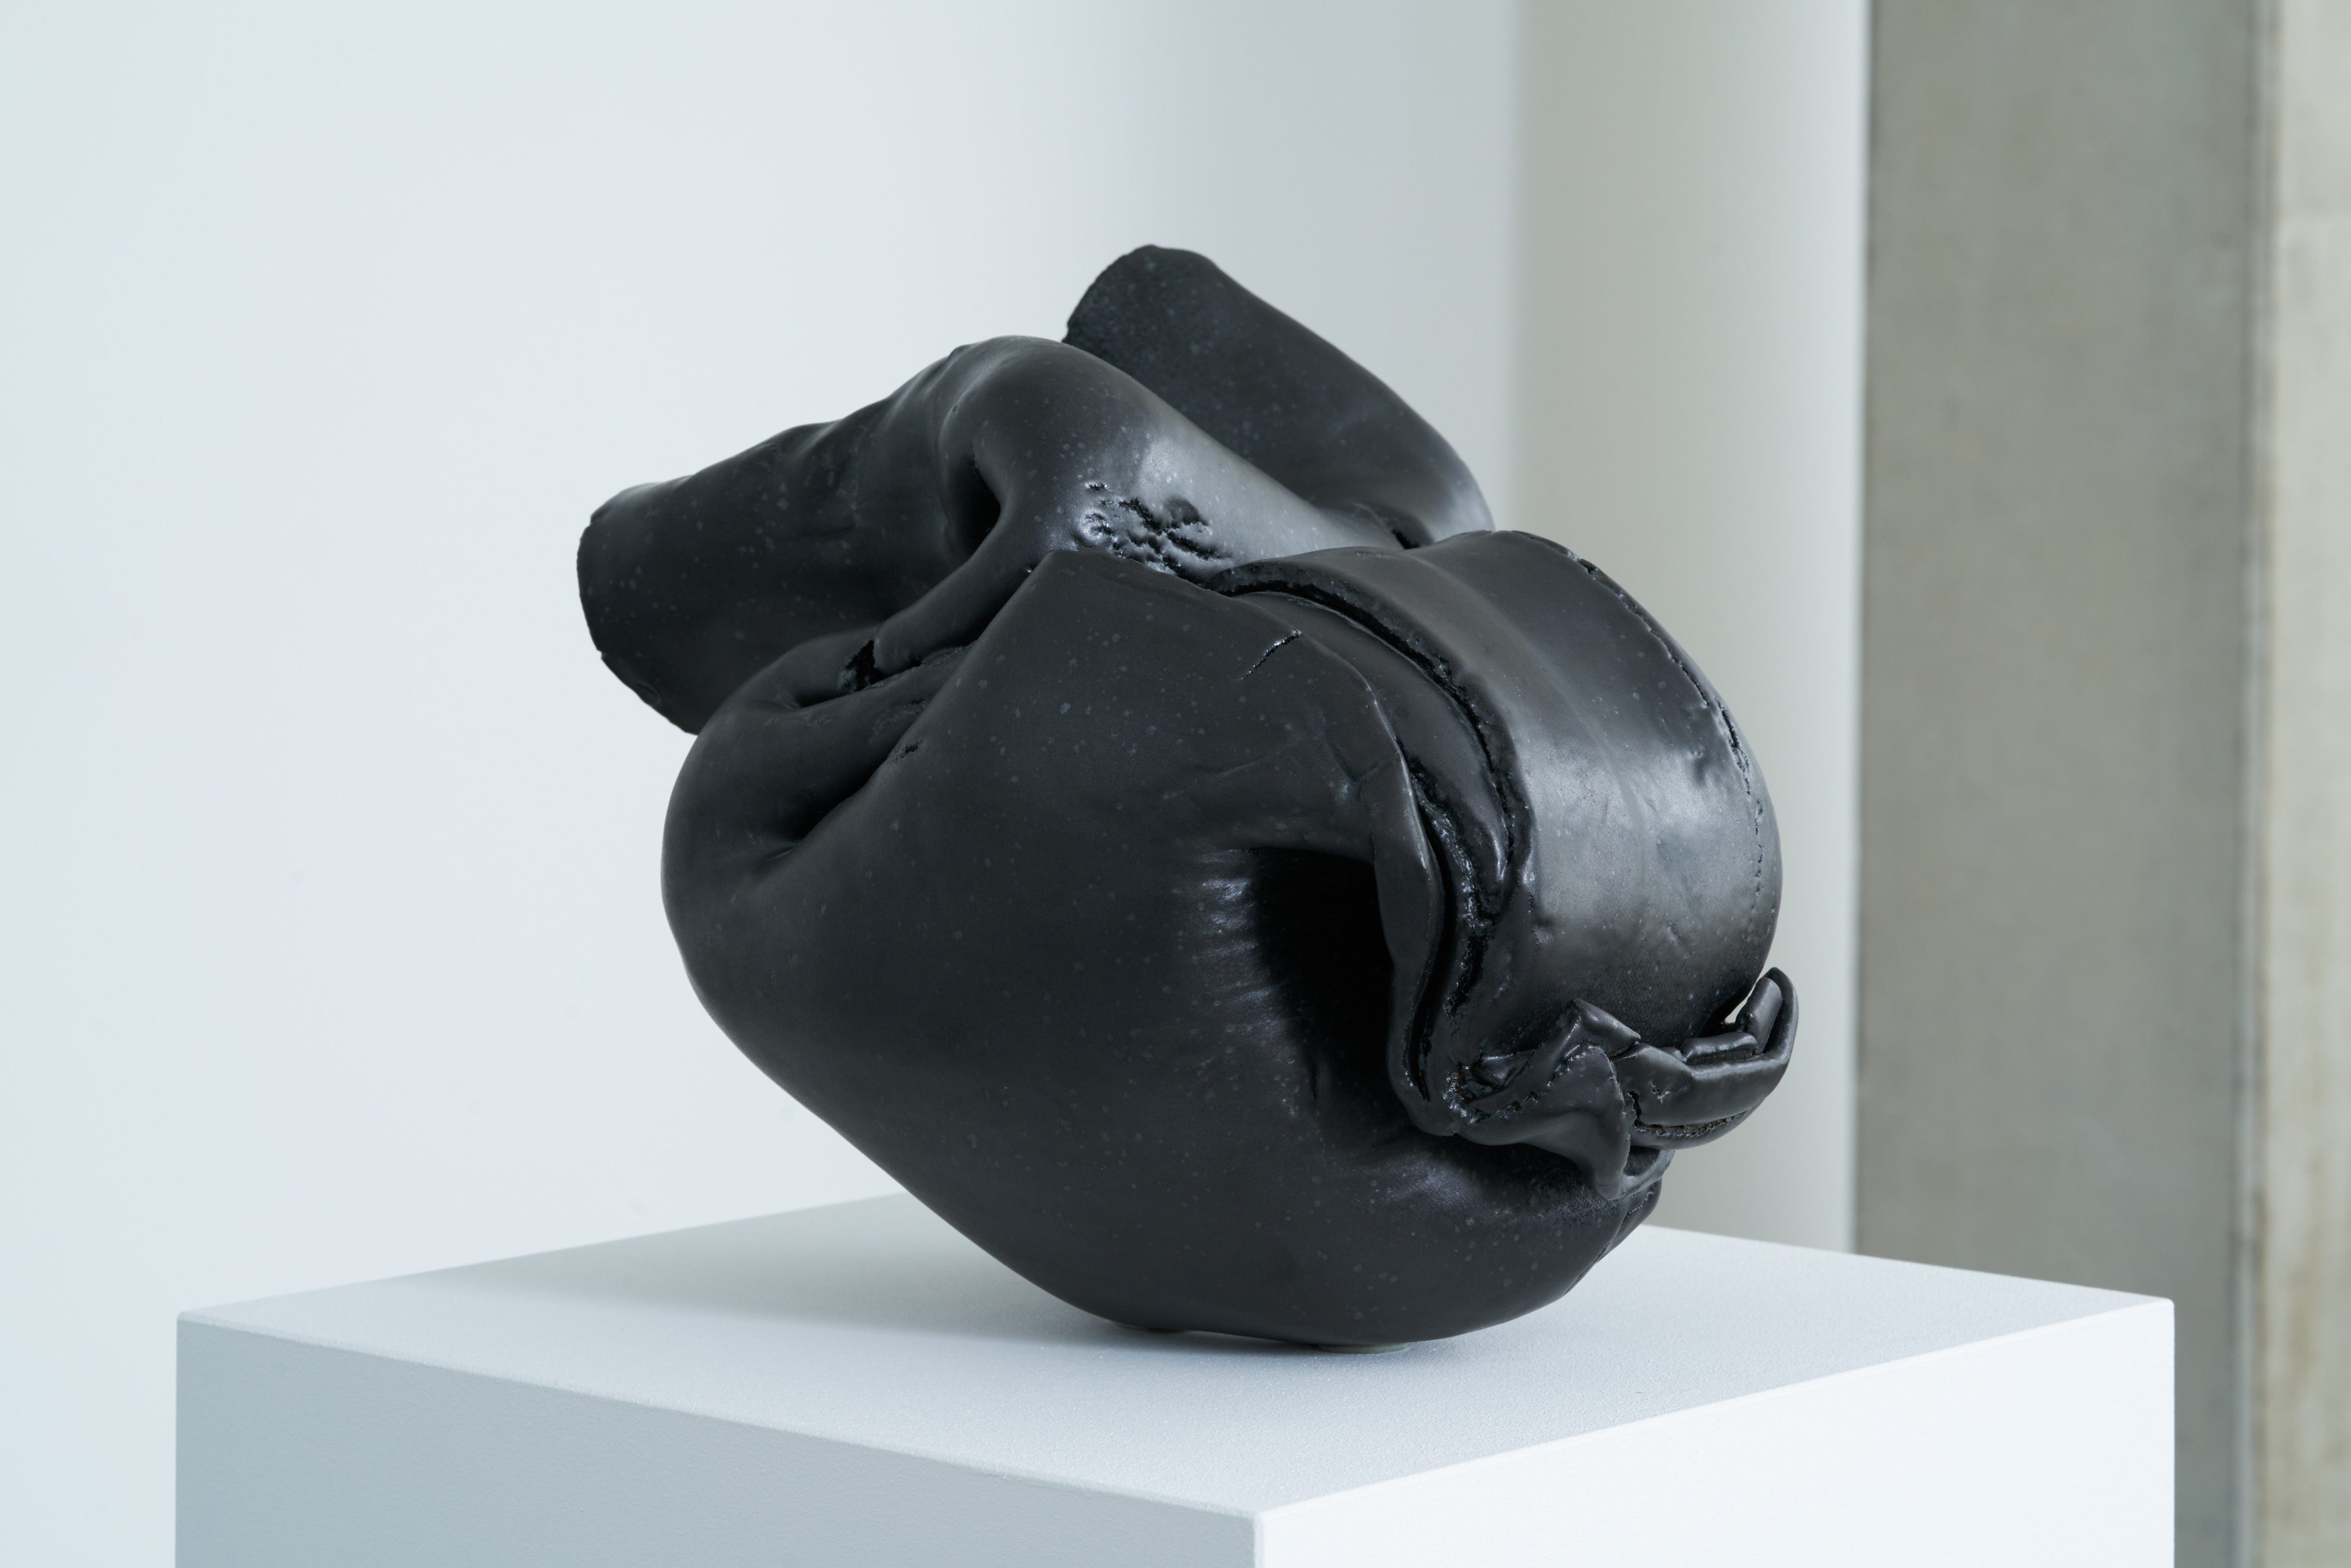 The Black Knot, 2014
Ceramic
29.2 x 31.8 x 30 cm / 11.5 x 12.5 x 11.8 in.

Enquire